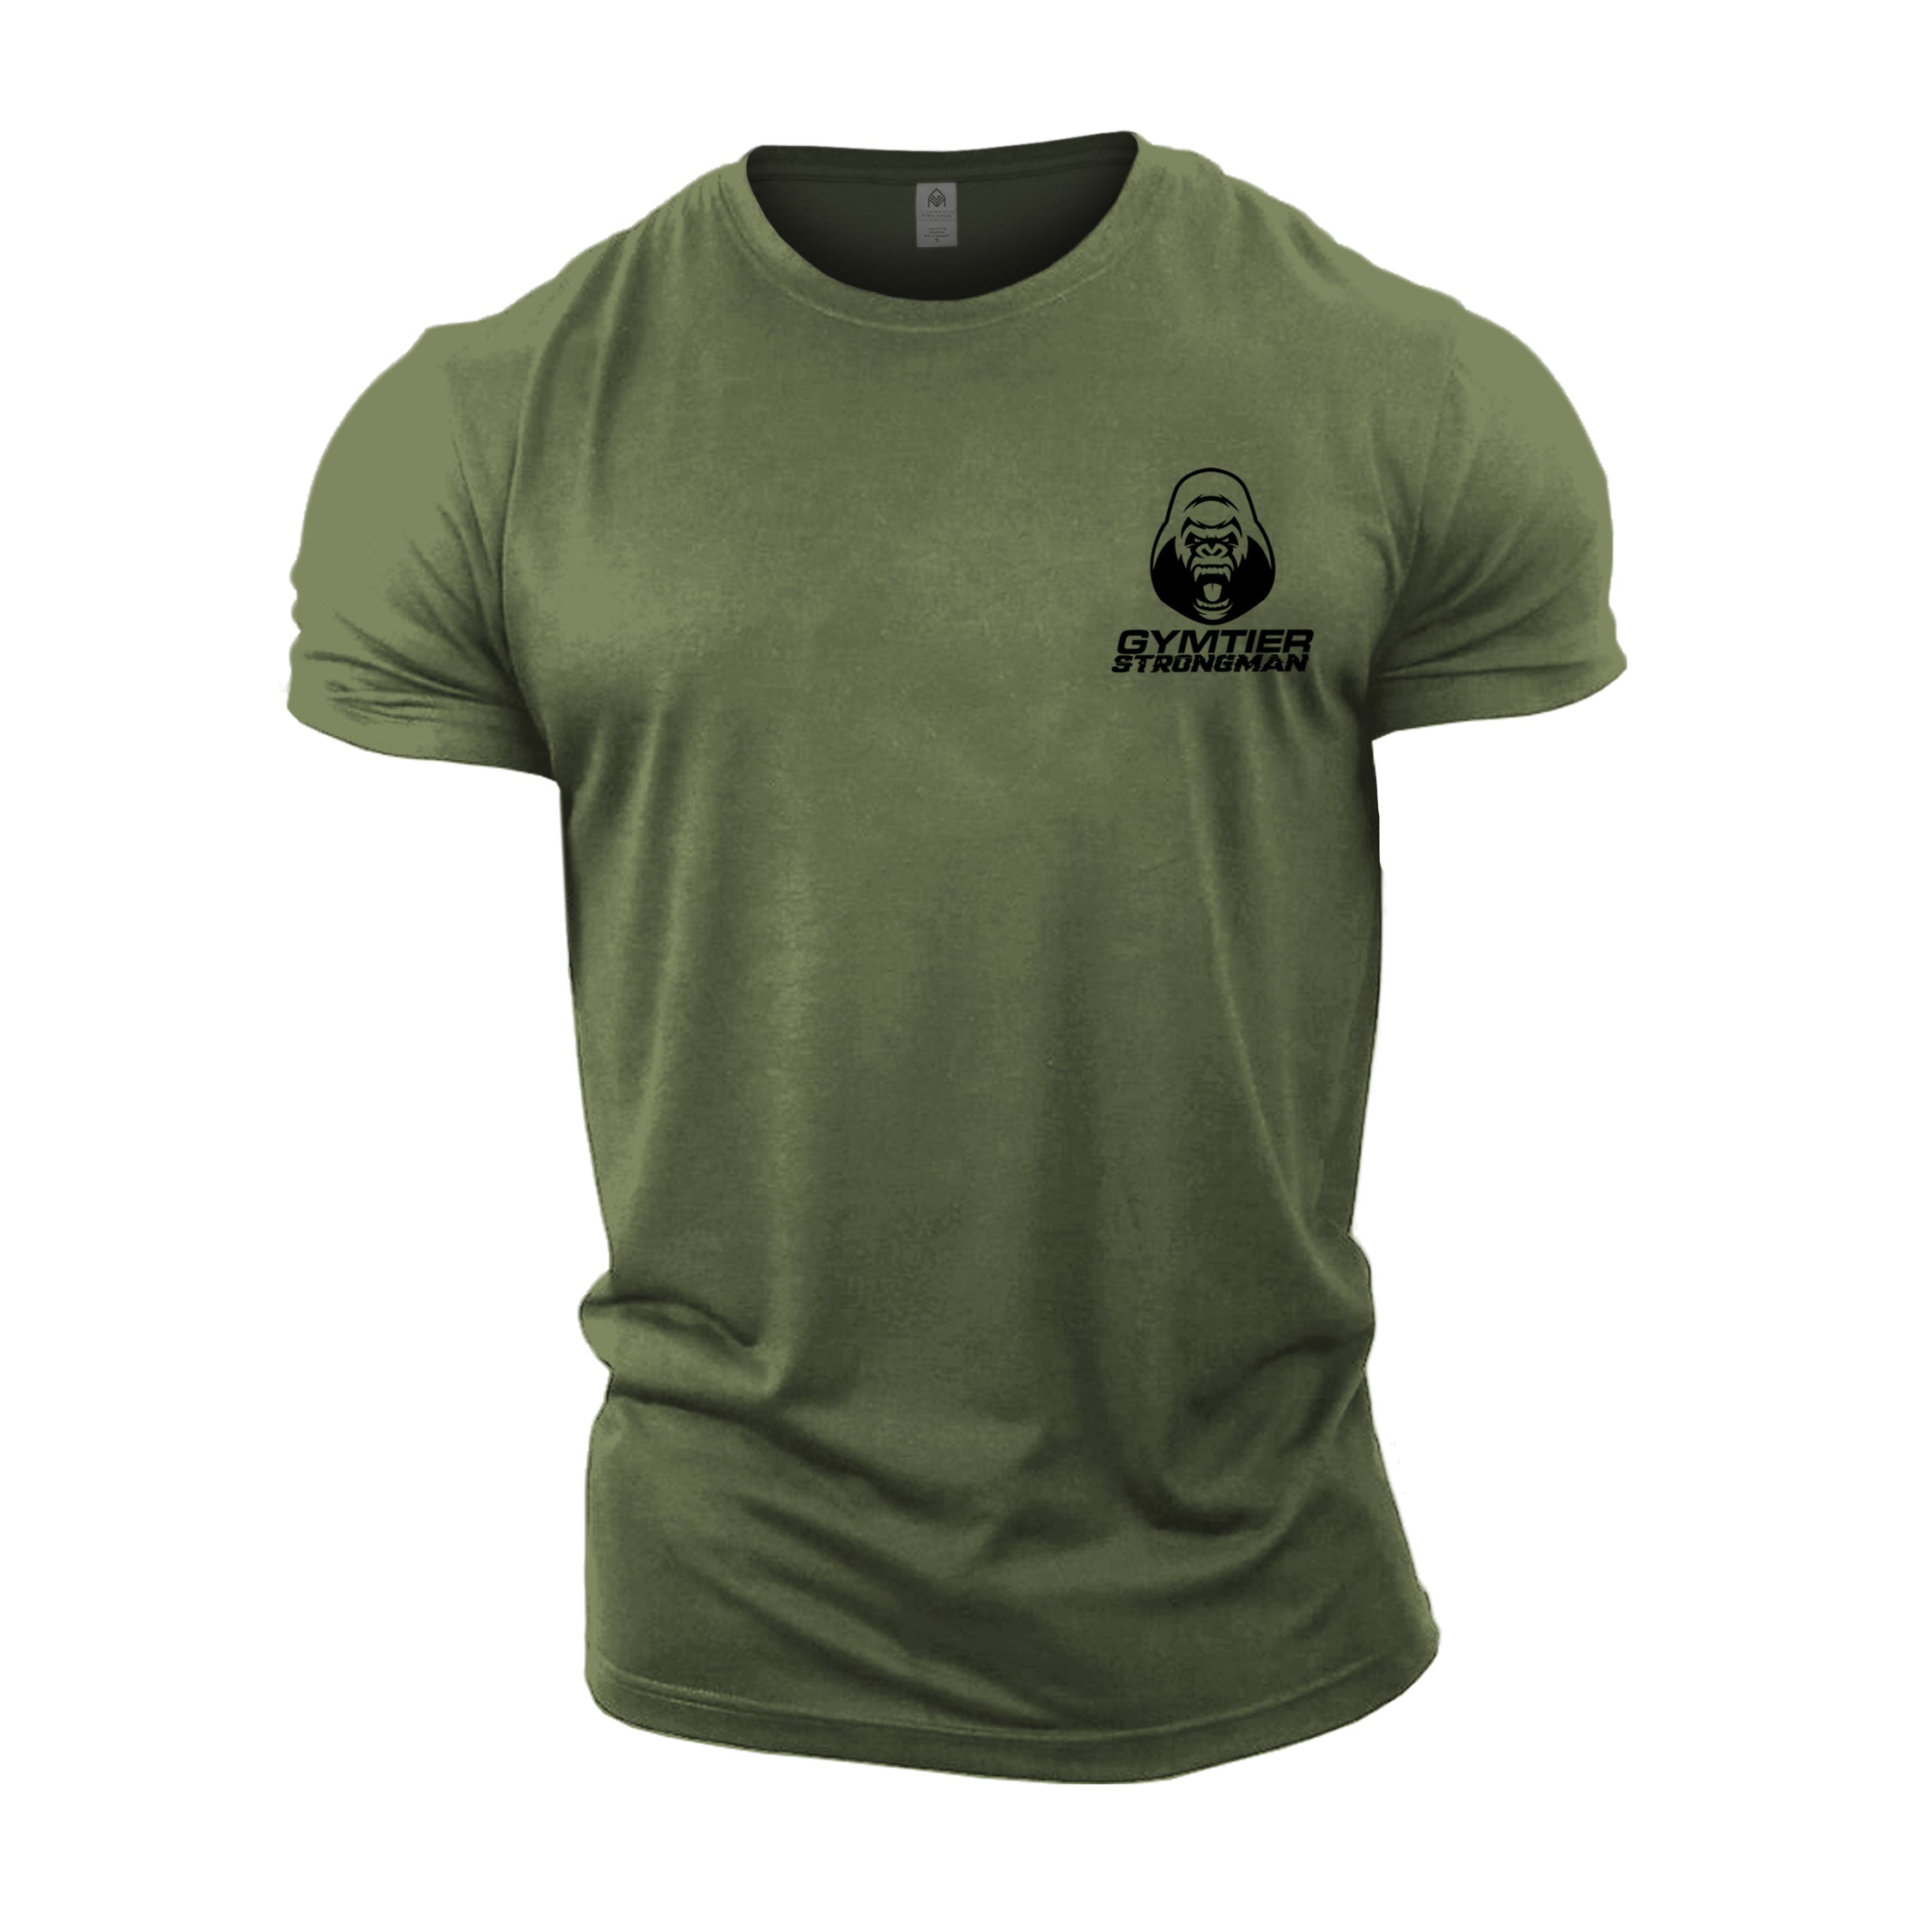 GYMTIER Strongman - Gym T-Shirt